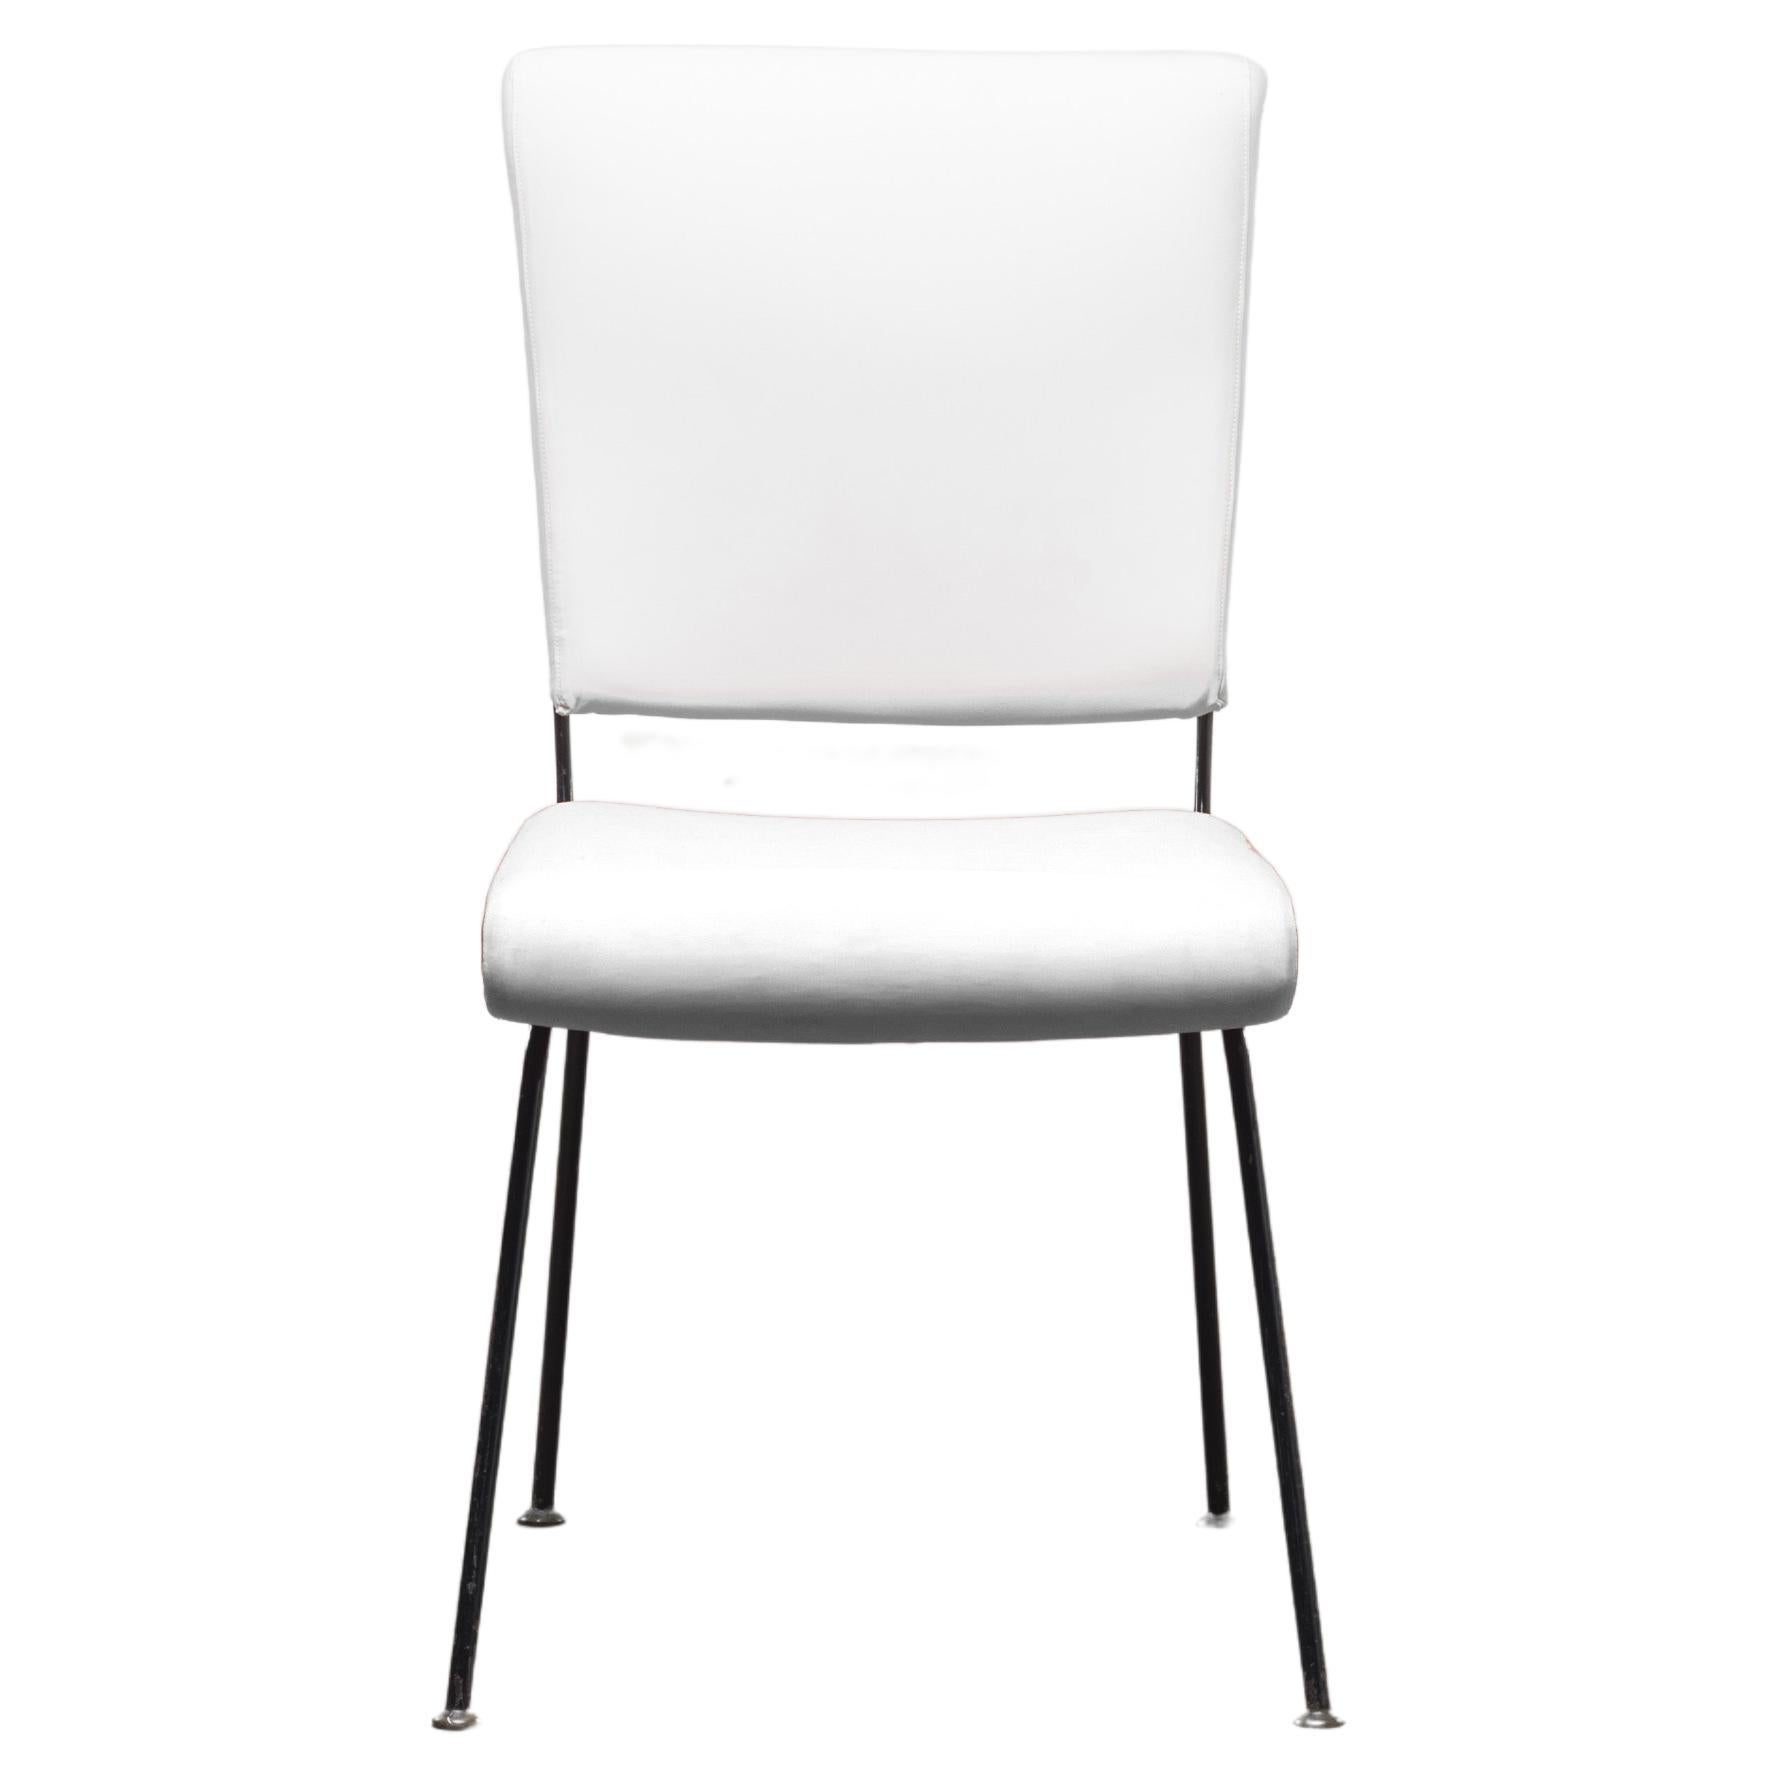 Chair Mod. Du 24 White leather 